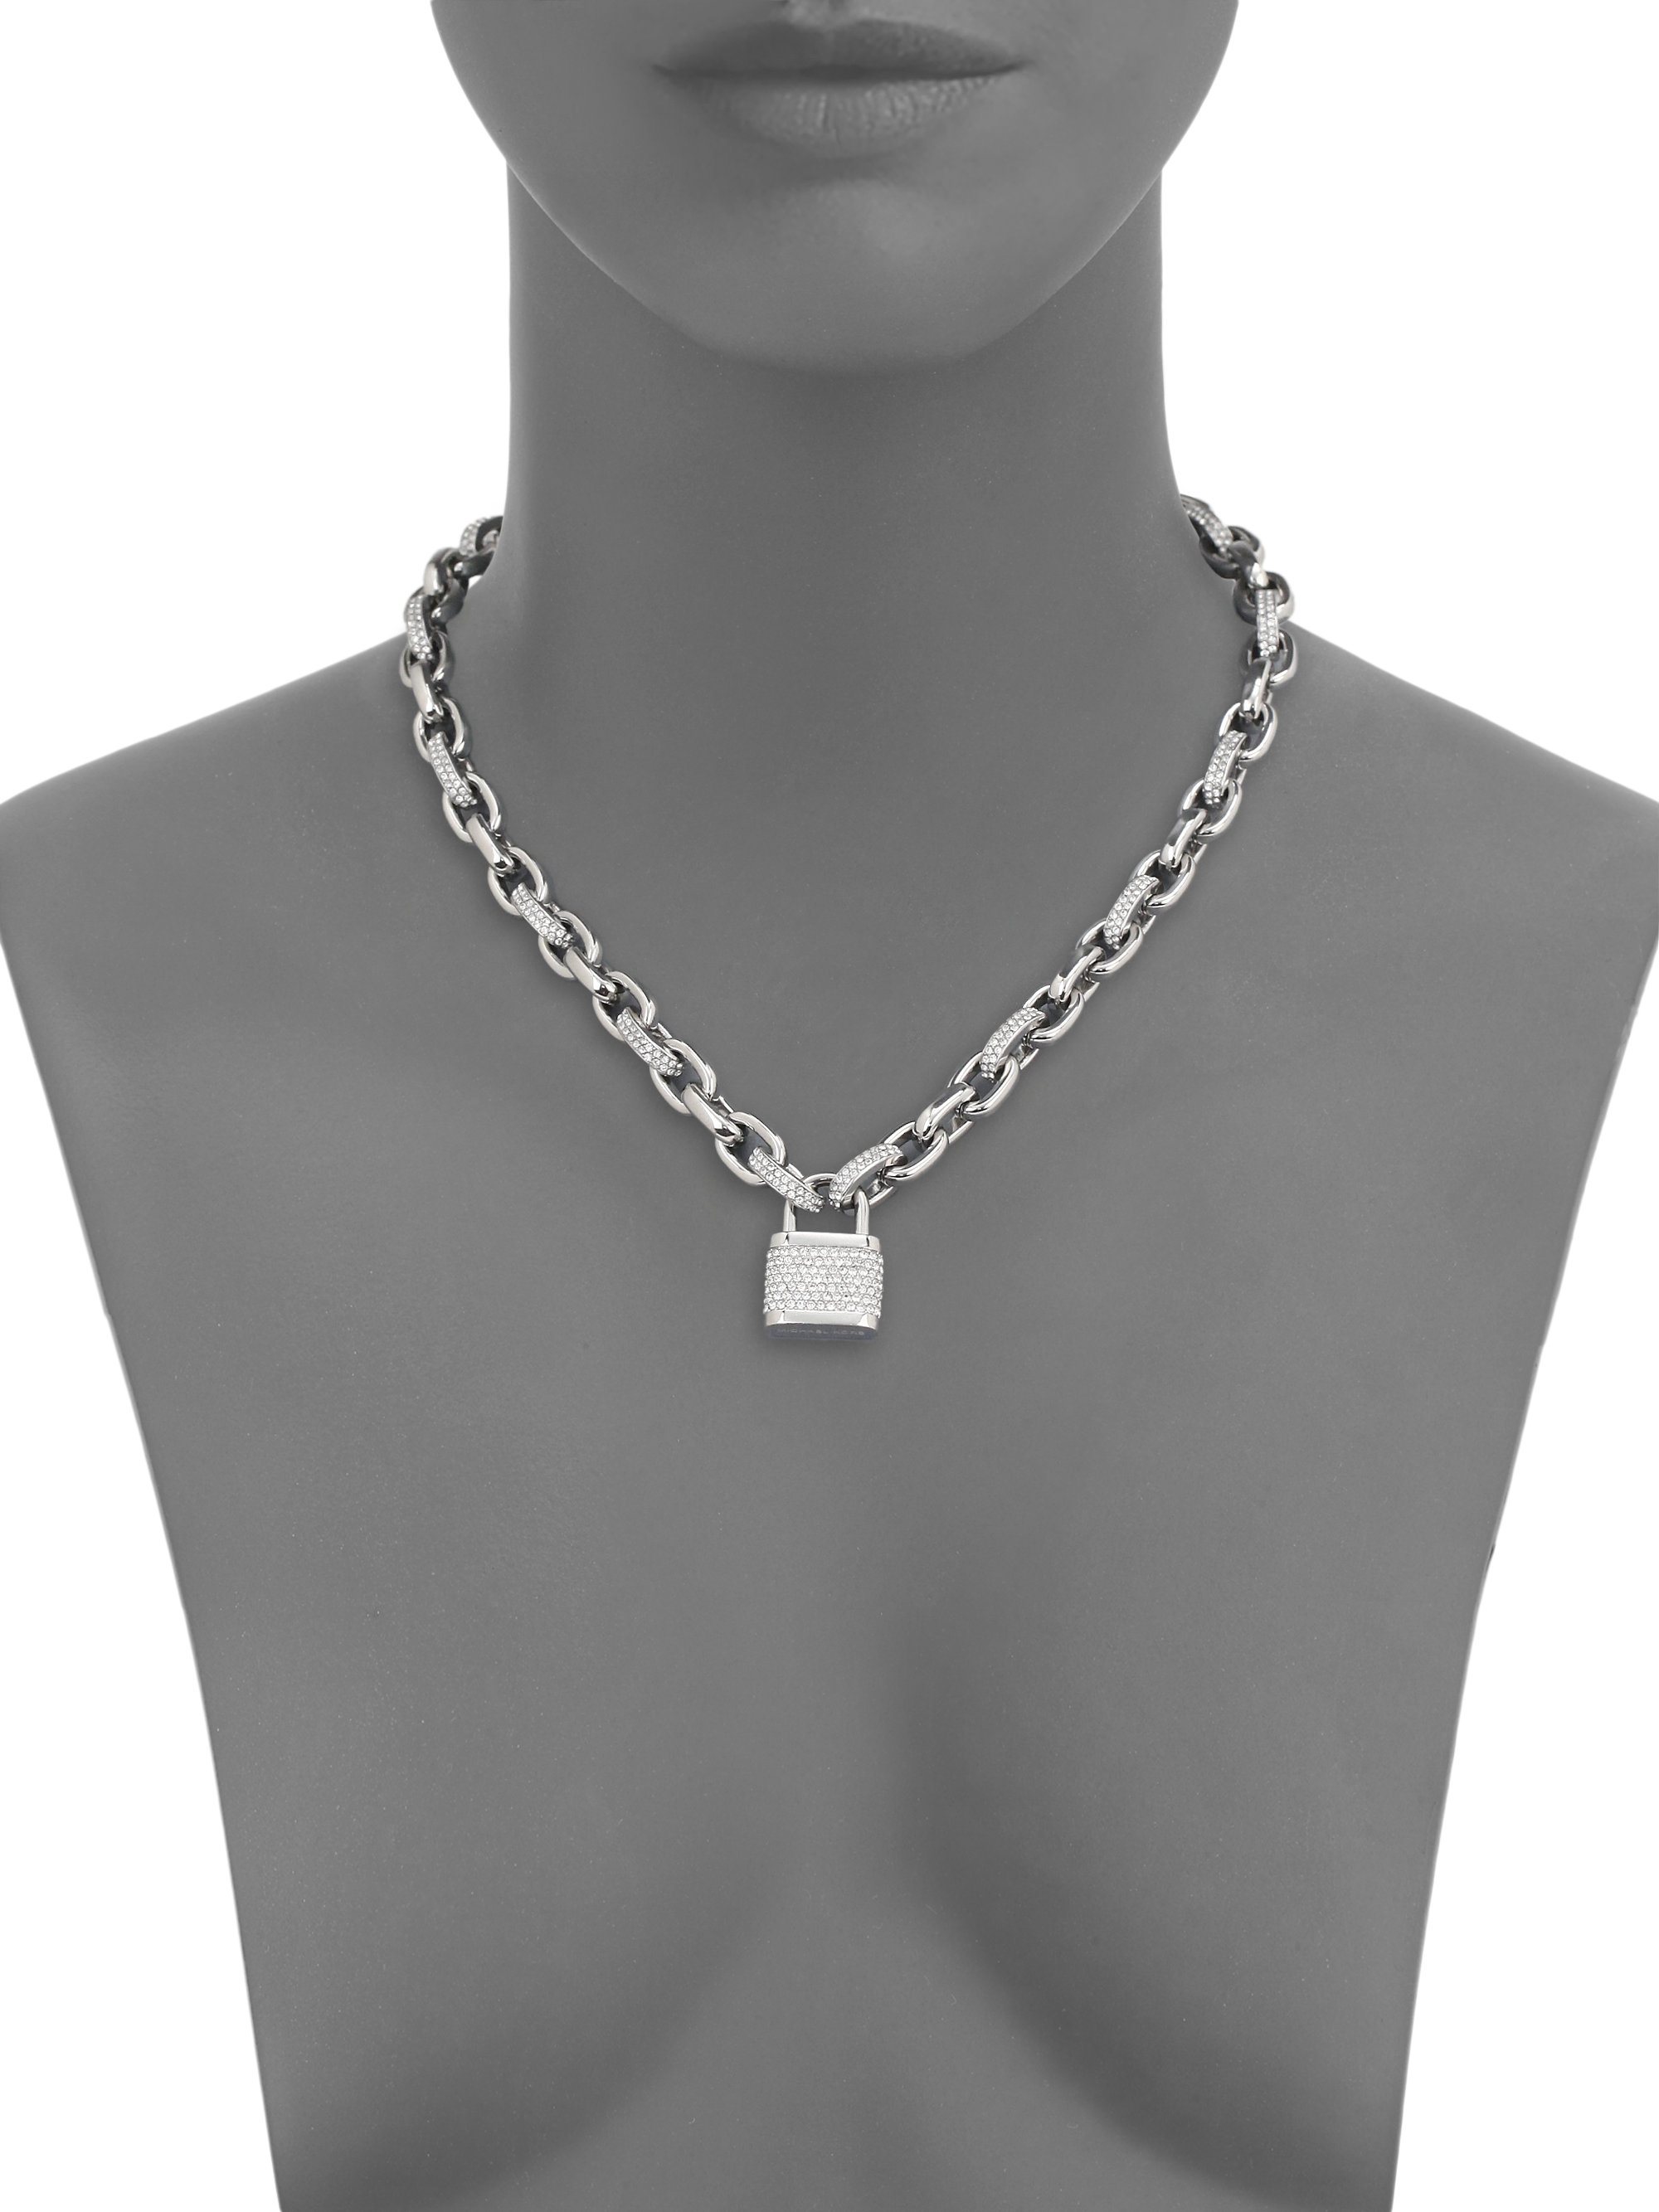 Michael Kors PavÉ Padlock Chain Necklace/Silvertone in Metallic - Lyst